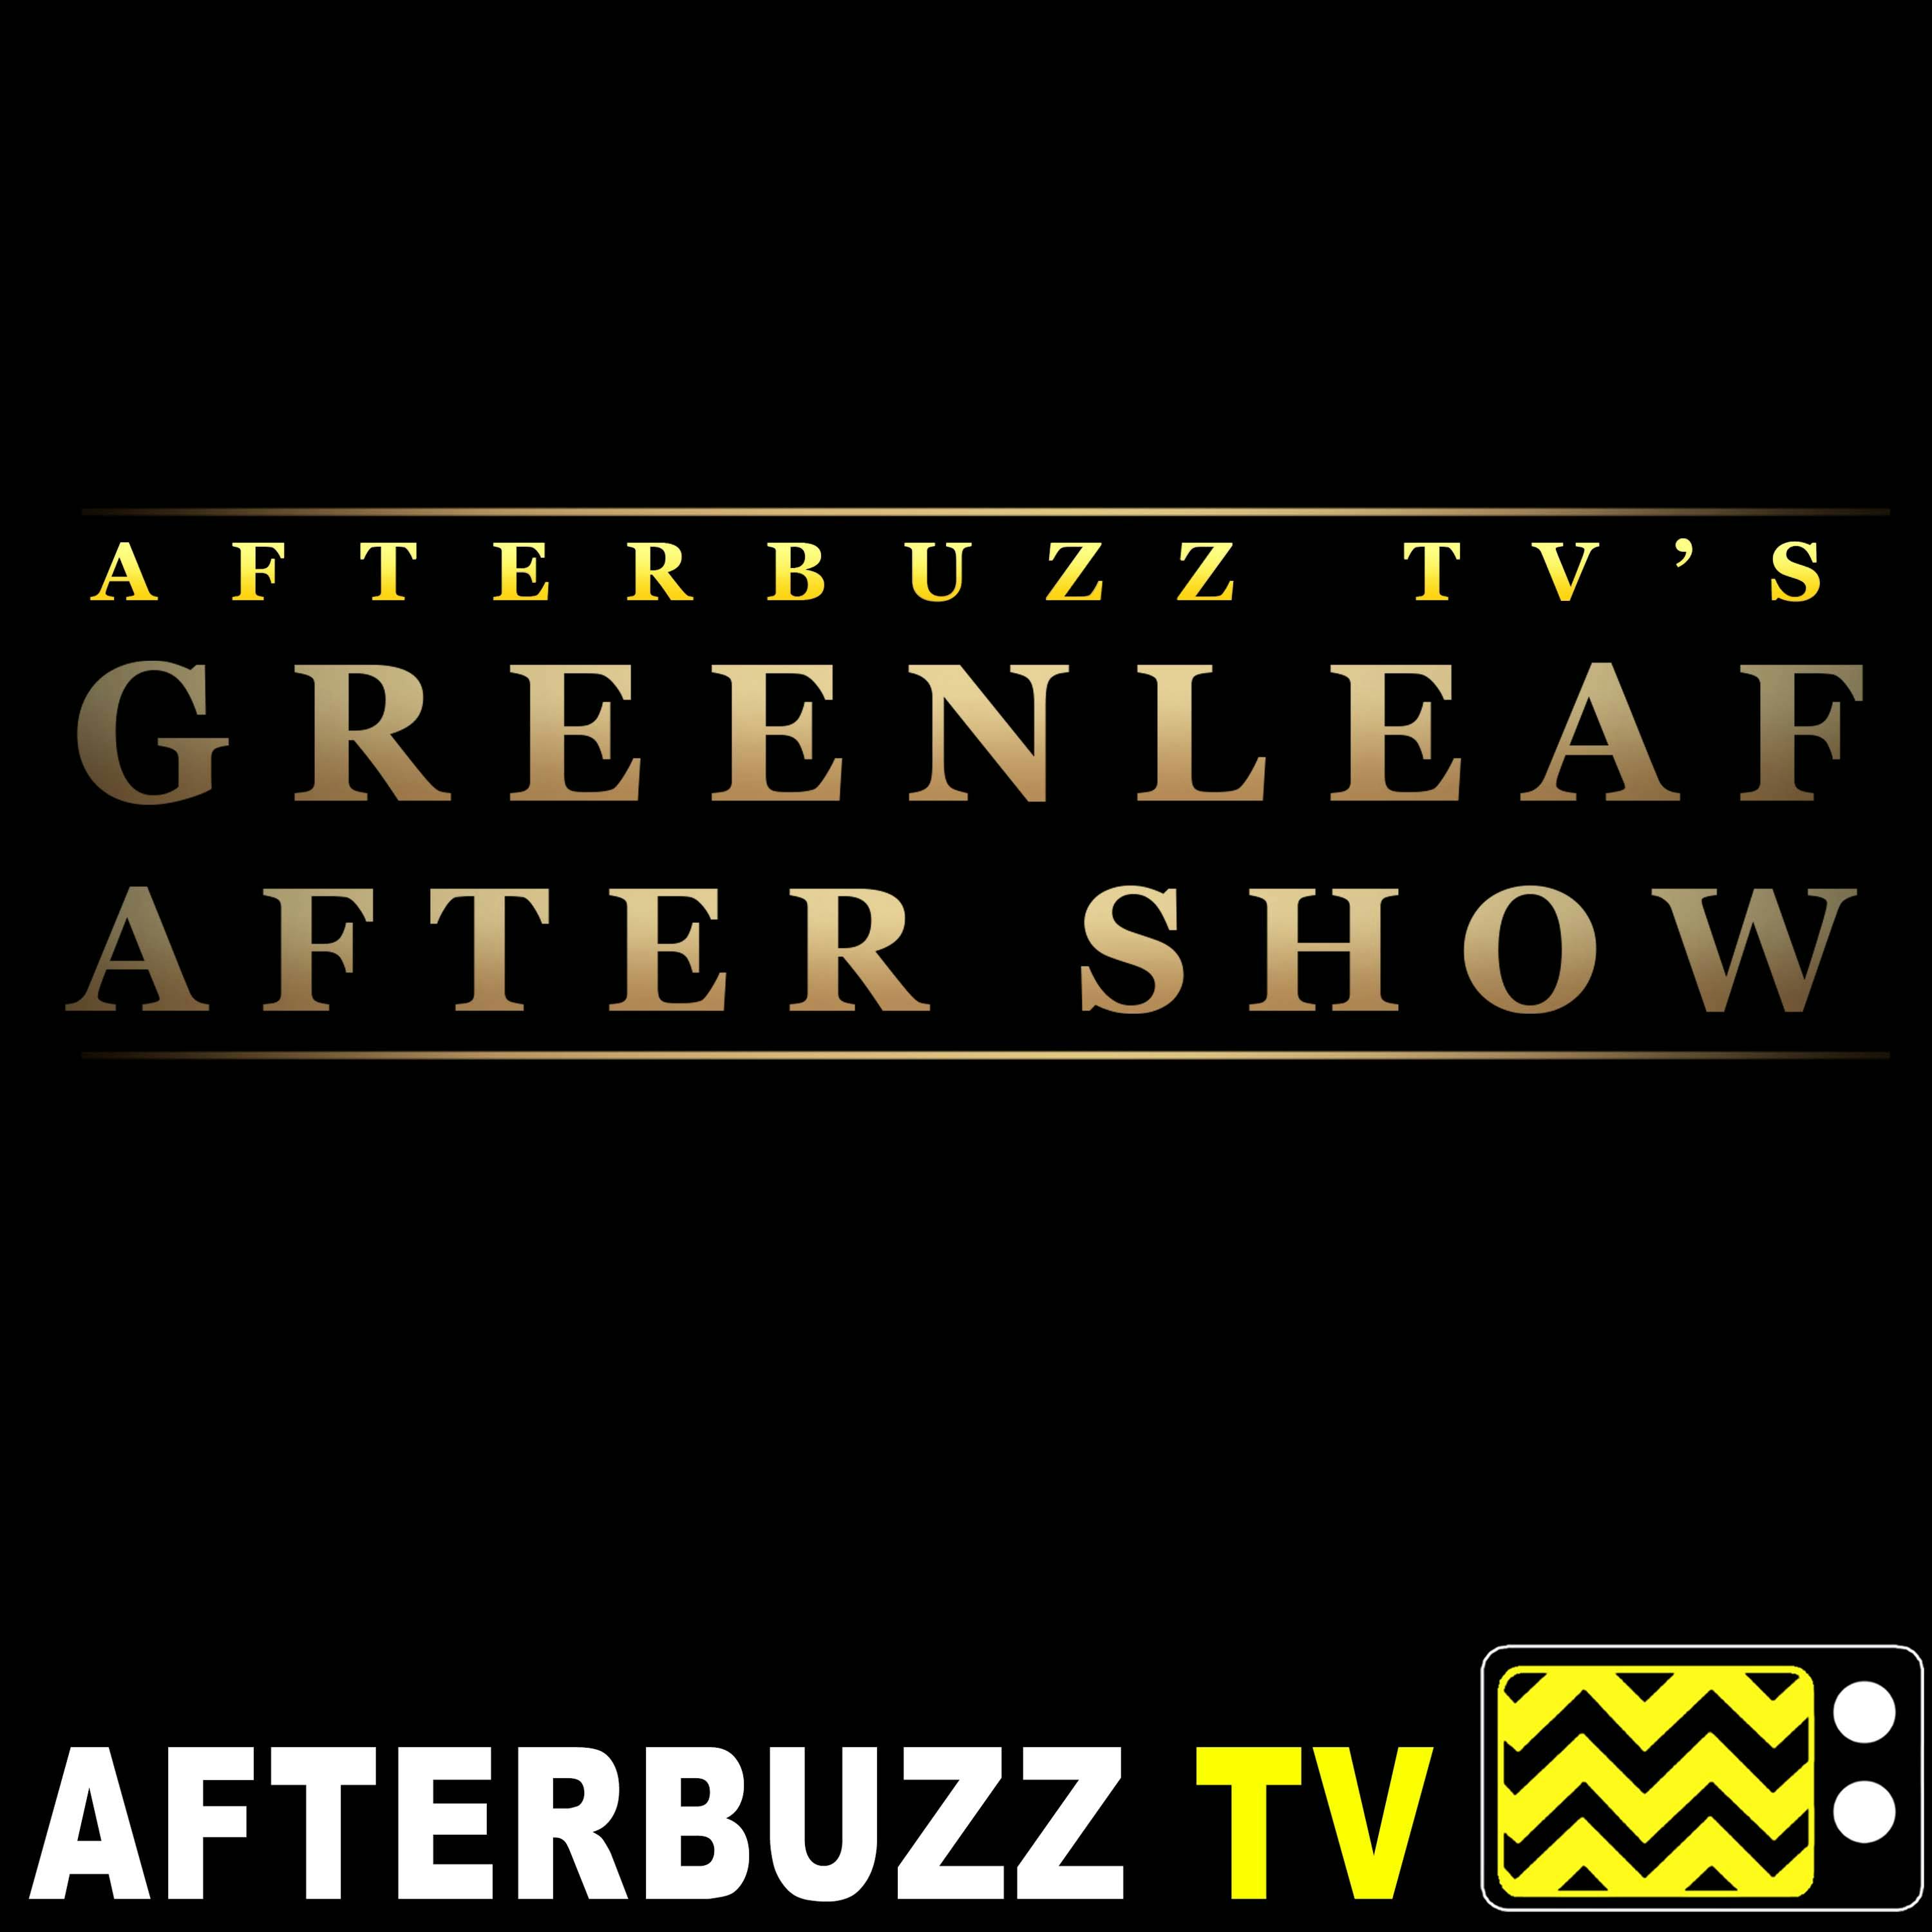 ”Did I Lose You?” Season 4 Episode 2 ’Greenleaf’ Review